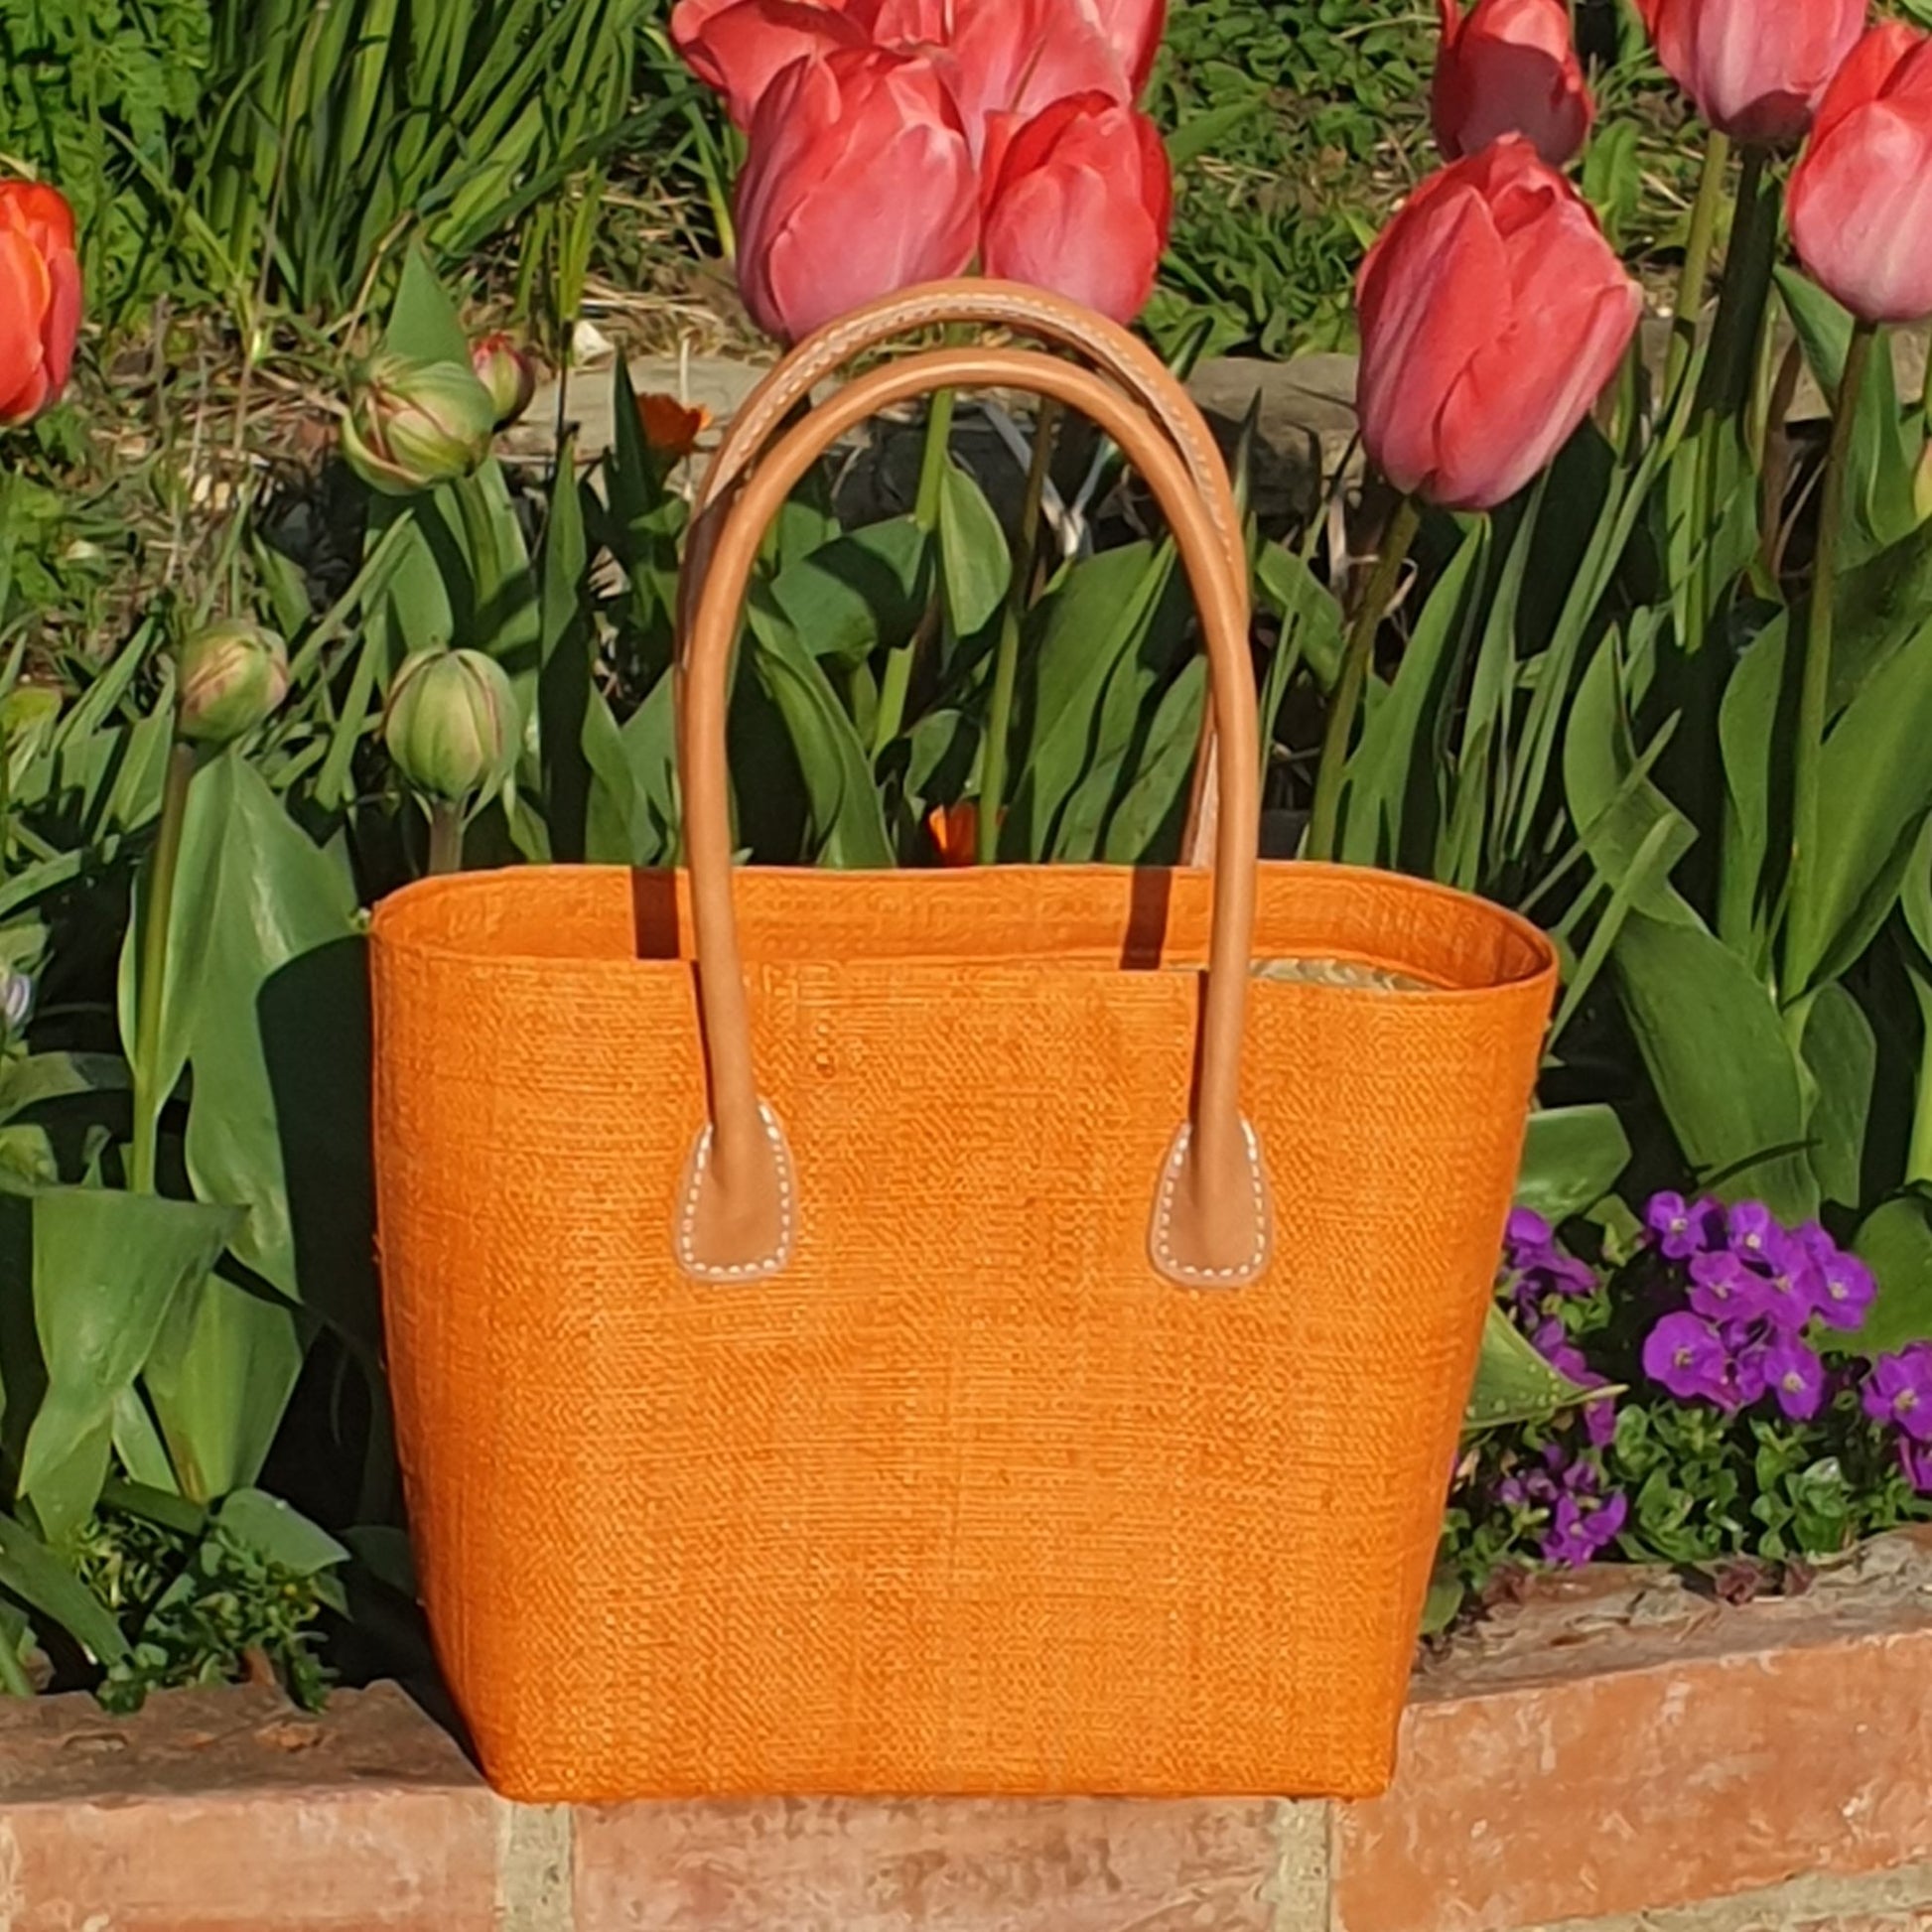 Bright orange raffia basket with leather handles